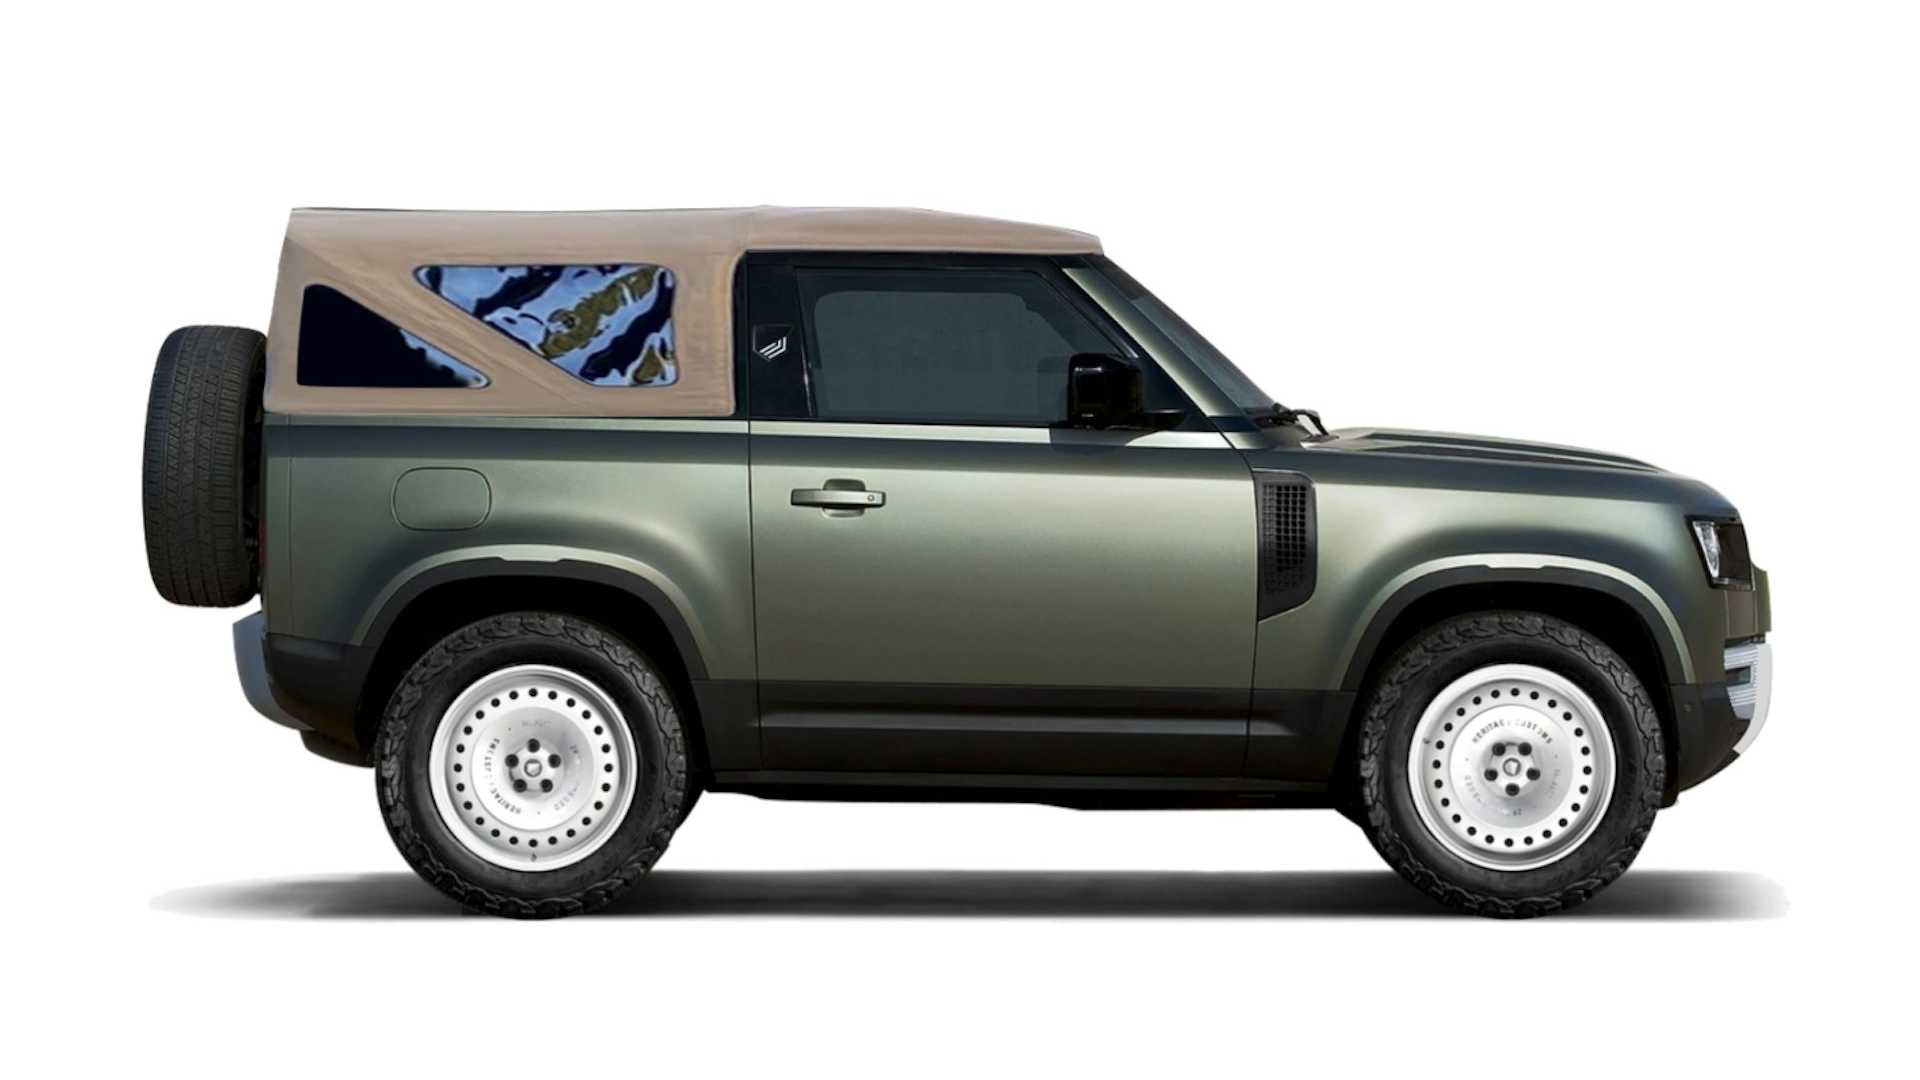 Nowy Land Rover Defender w wersji cabrio - 5 sztuk od Heritage Customs